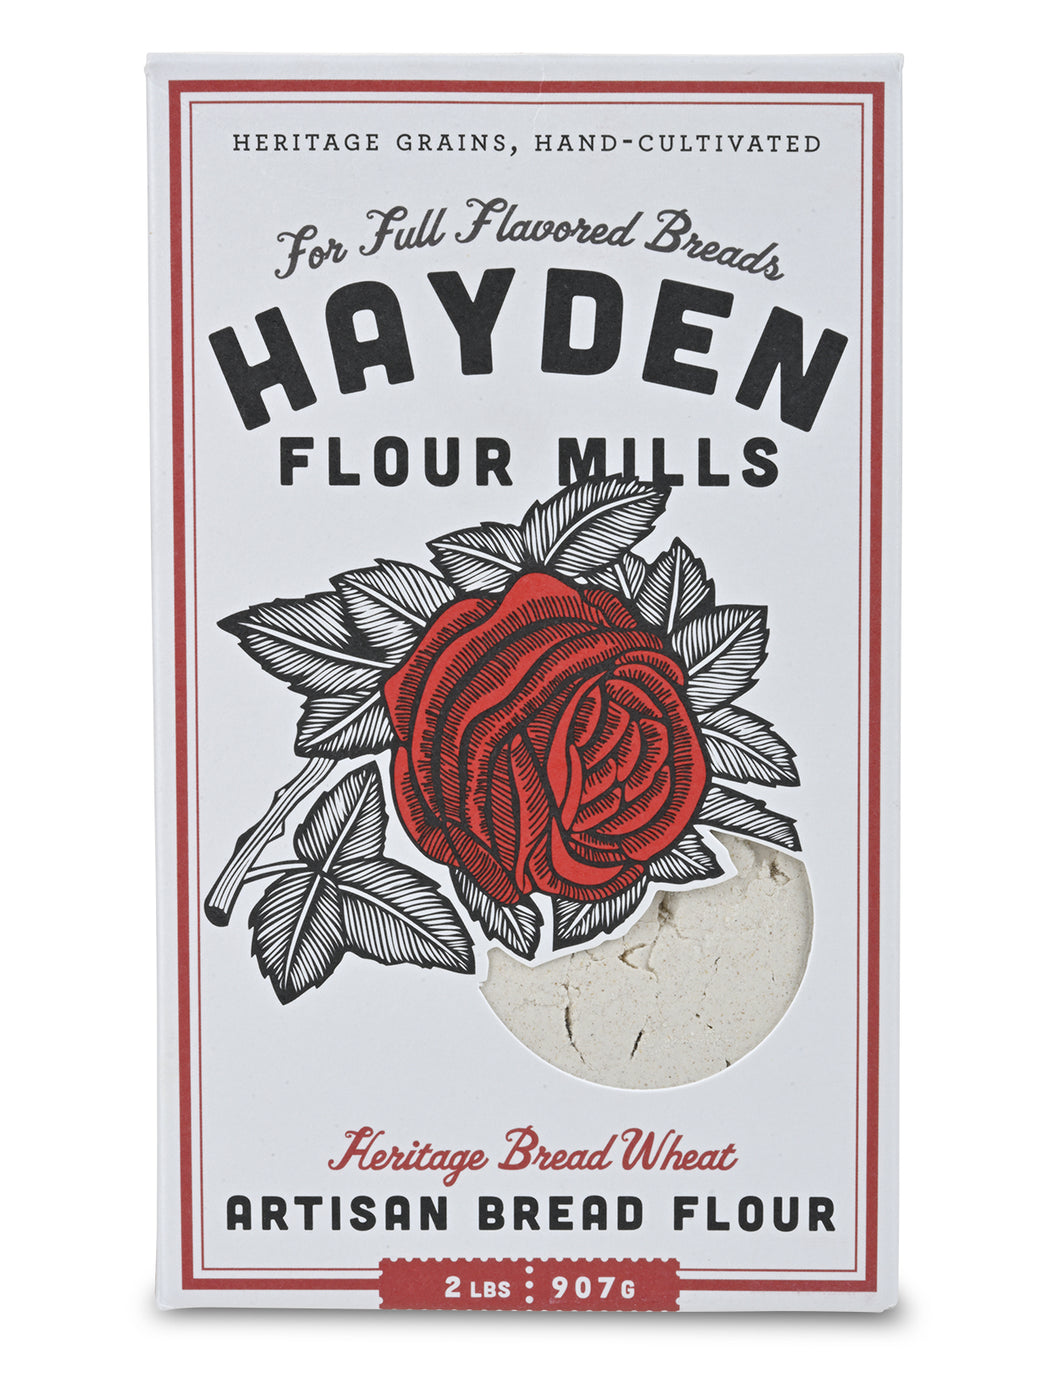 Package of Hayden Flour Mills Artisan Bread Flour